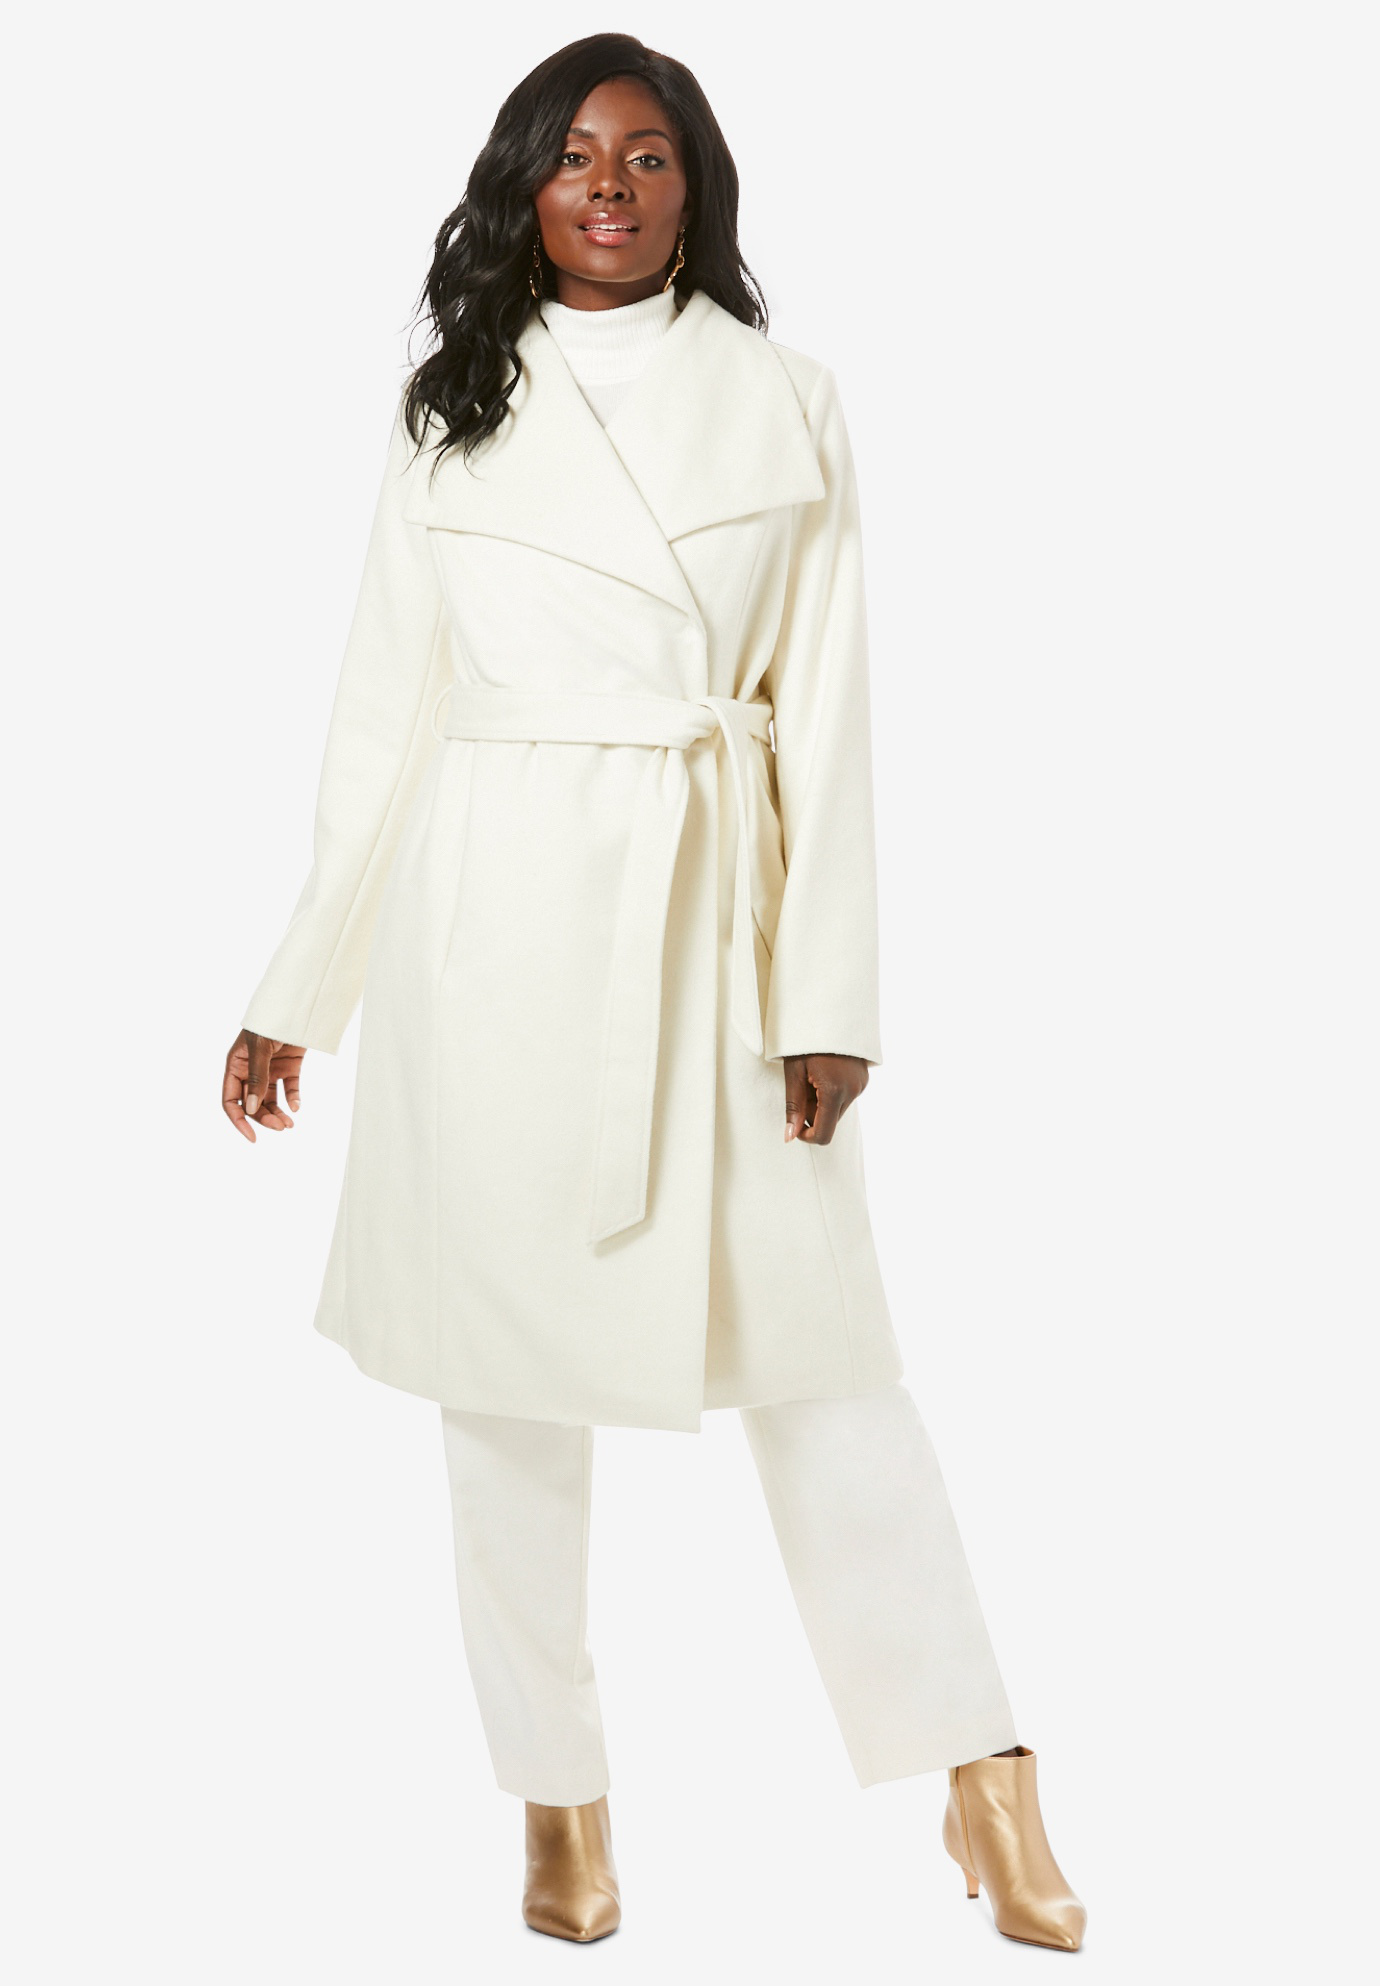 Jessica London Womens Plus Size Full Length Wool Blend Coat 